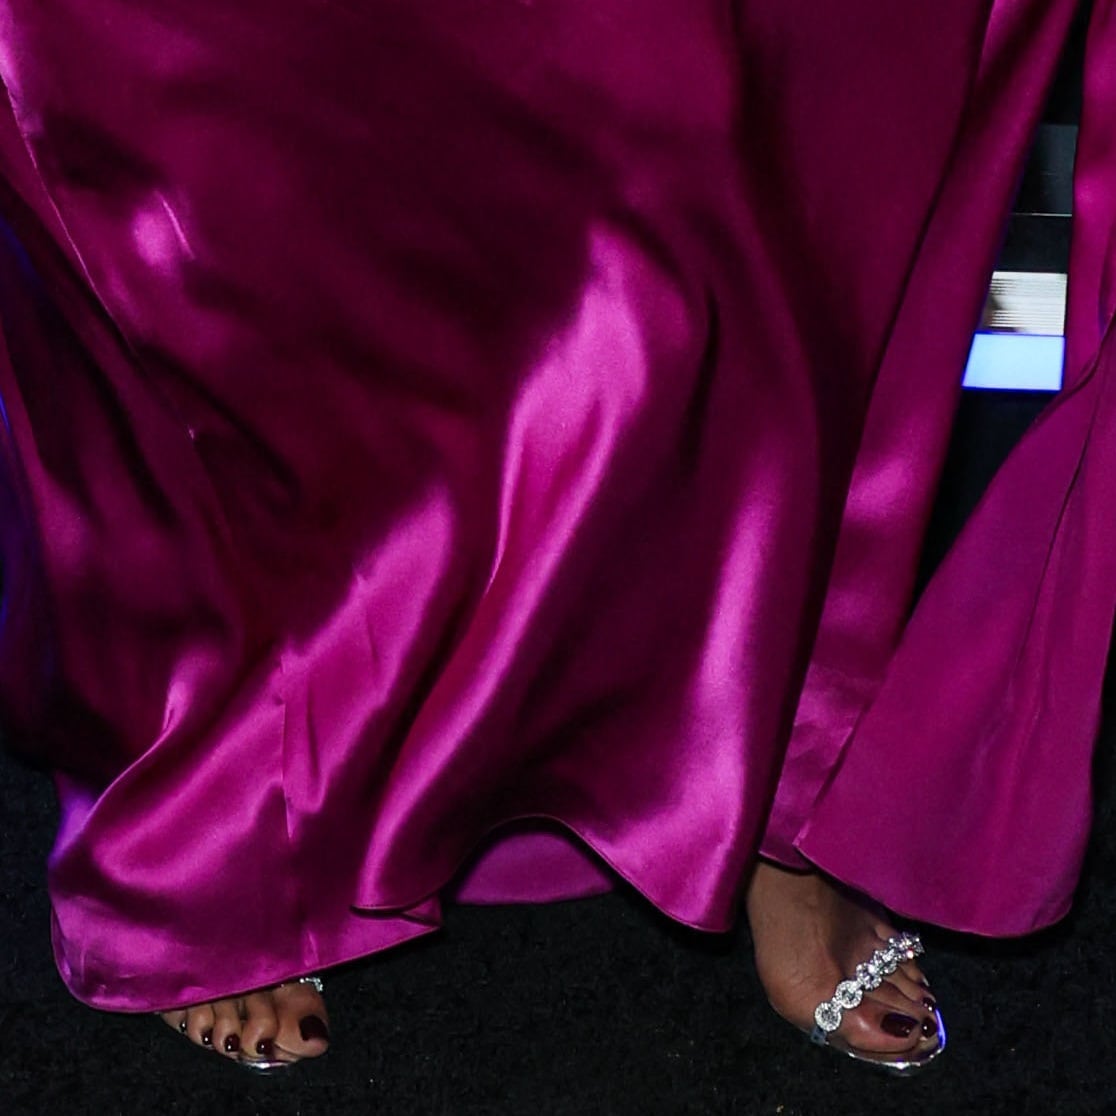 Priyanka Chopra shows off her feet in silver metallic crystal-embellished sandals